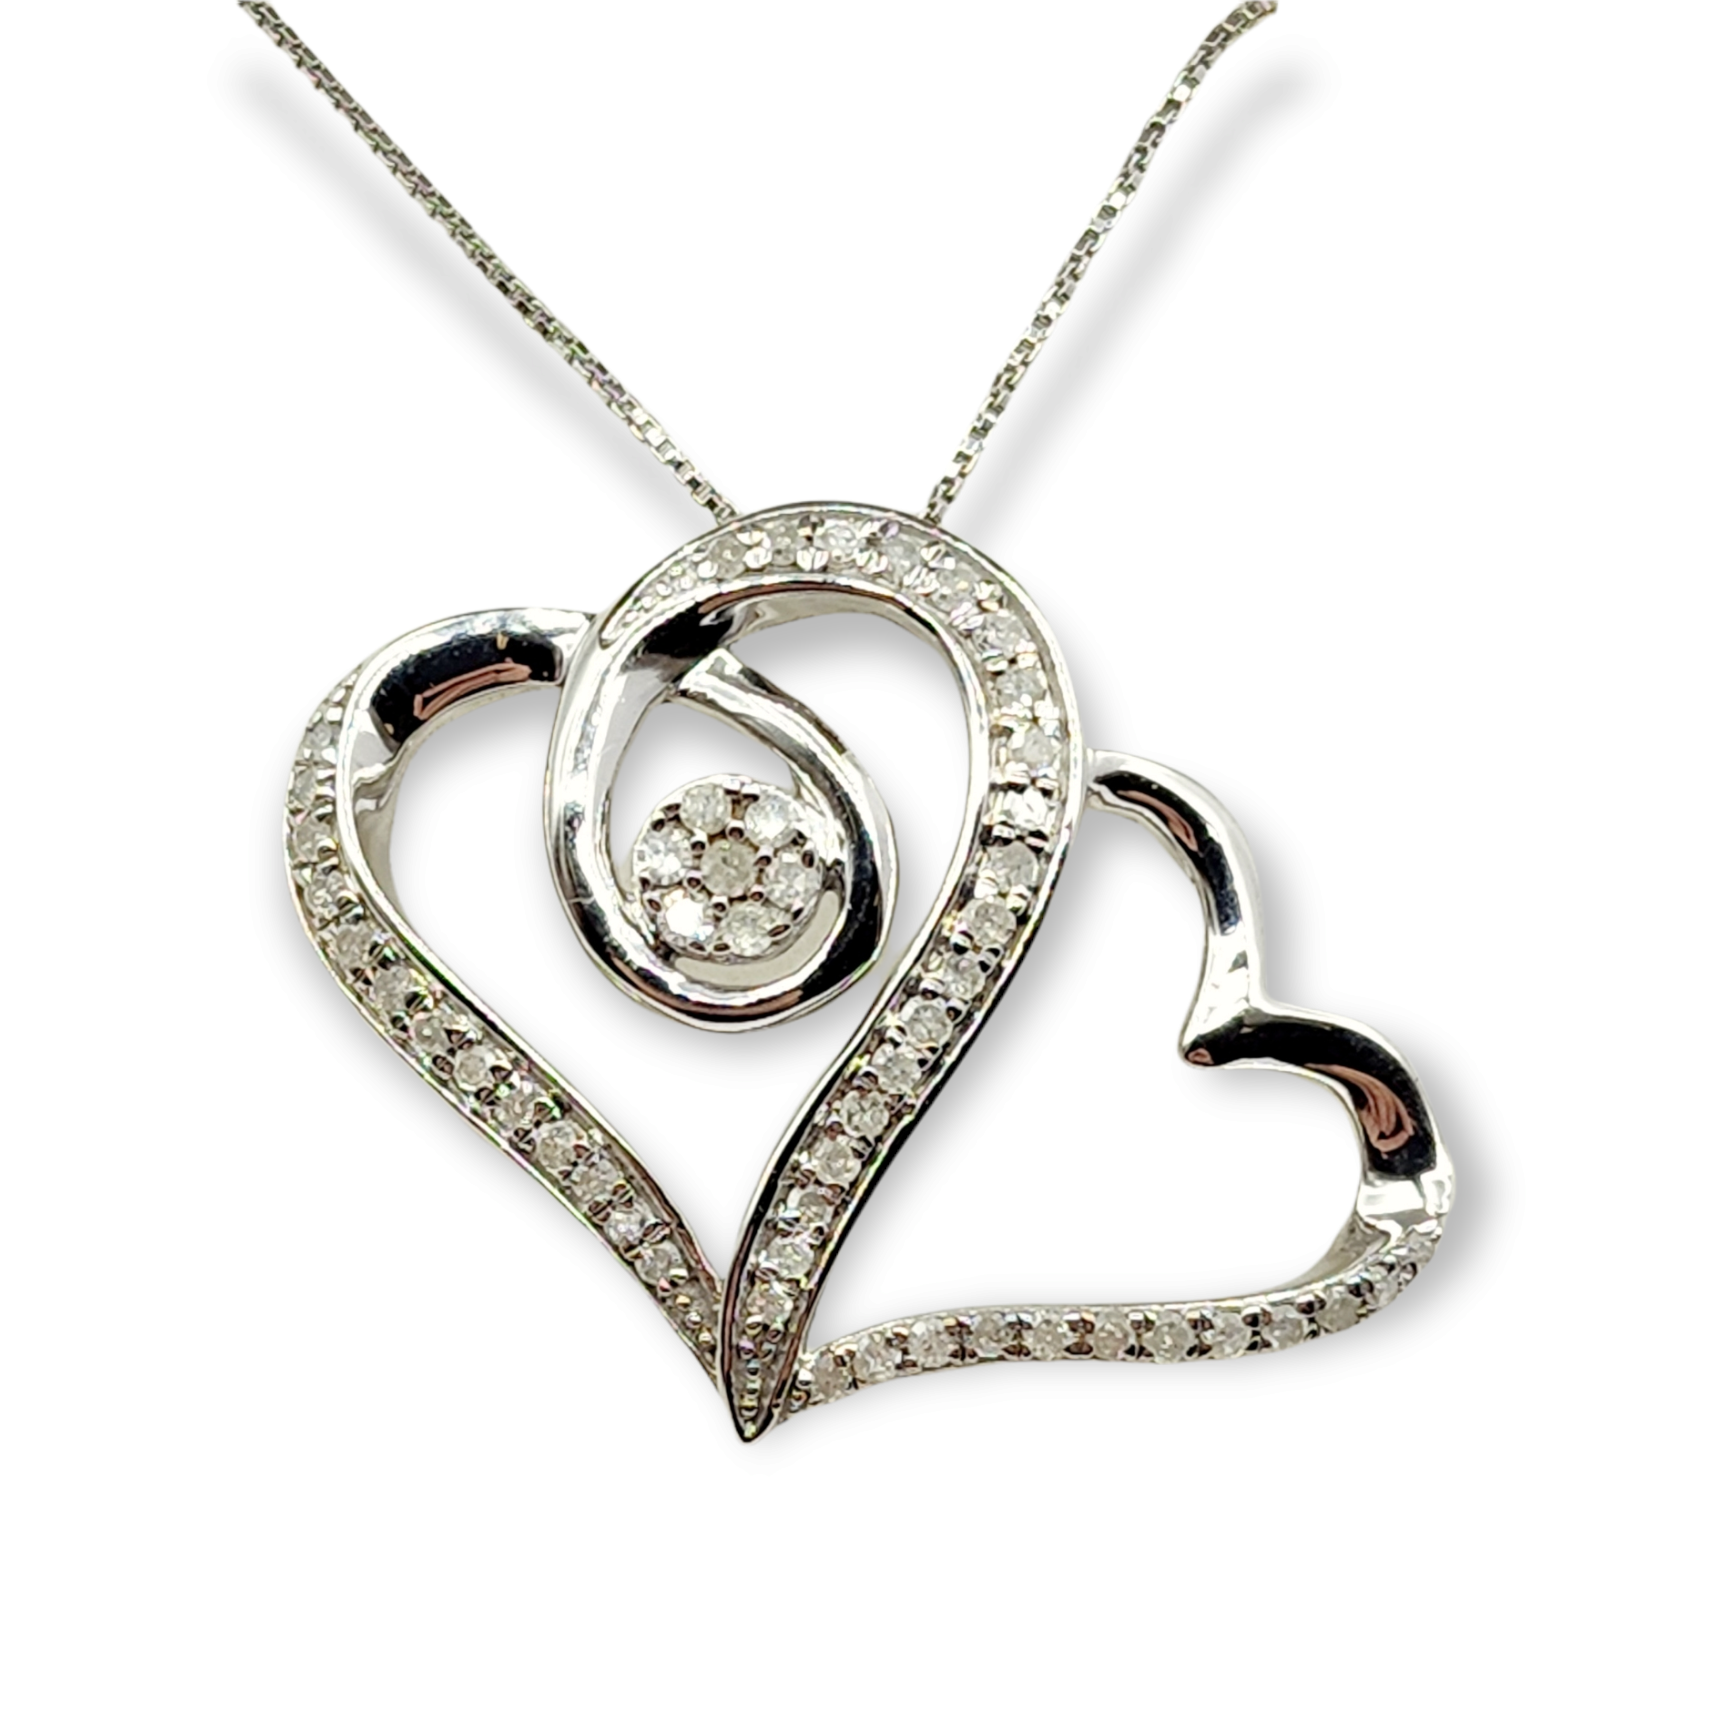 Twice the lovin' Diamond Hearts Pendant in Sterling Silver